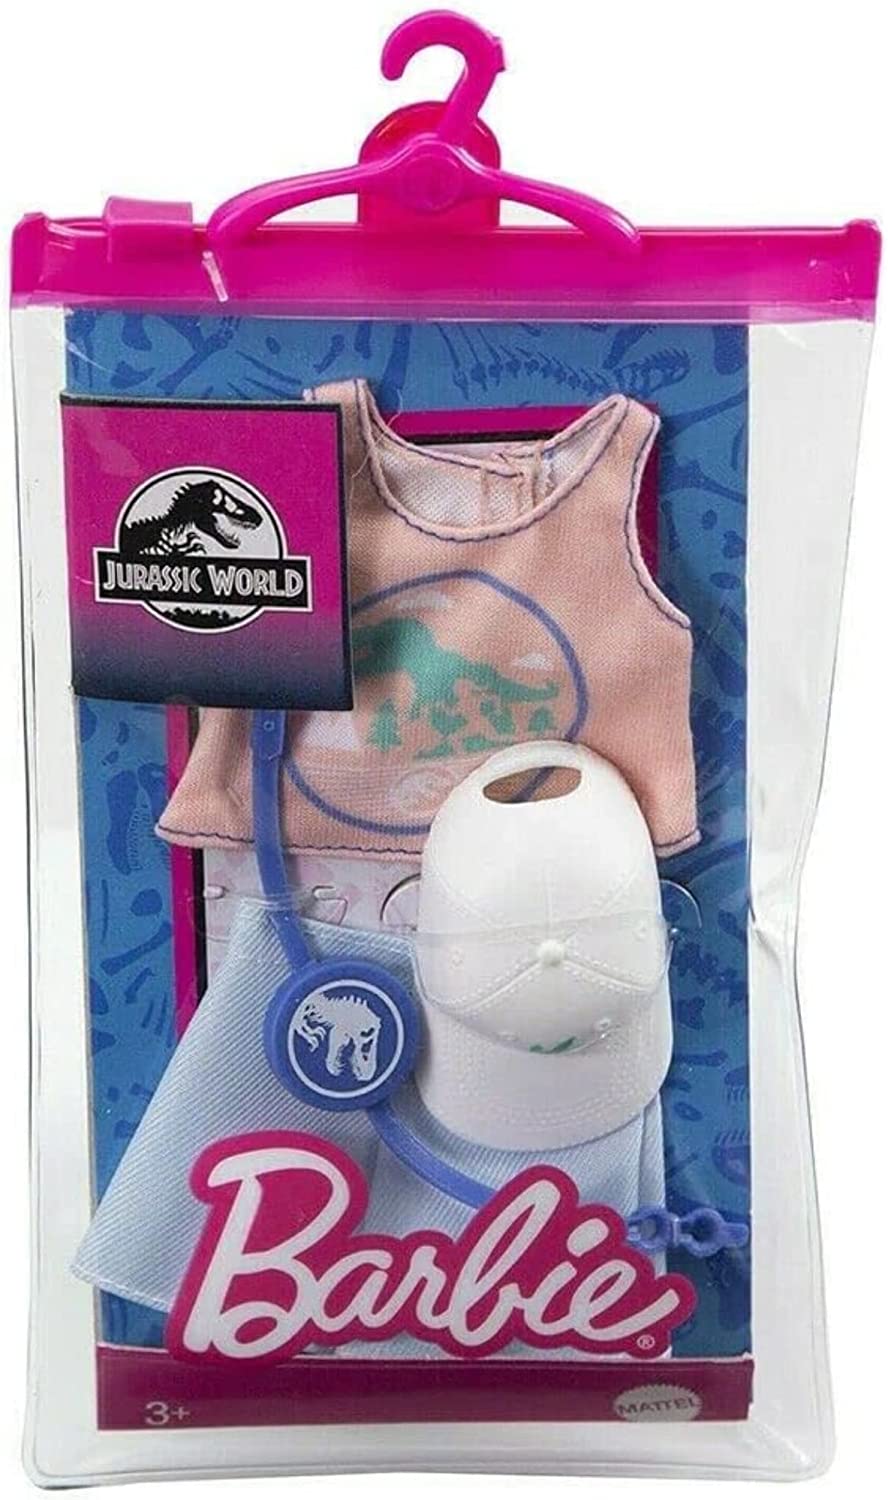 Barbie Jurassic World Clothing & Accessory Set Twin Pack - Dino Jumpsuit & Peach Dino Top Set - Toptoys2u